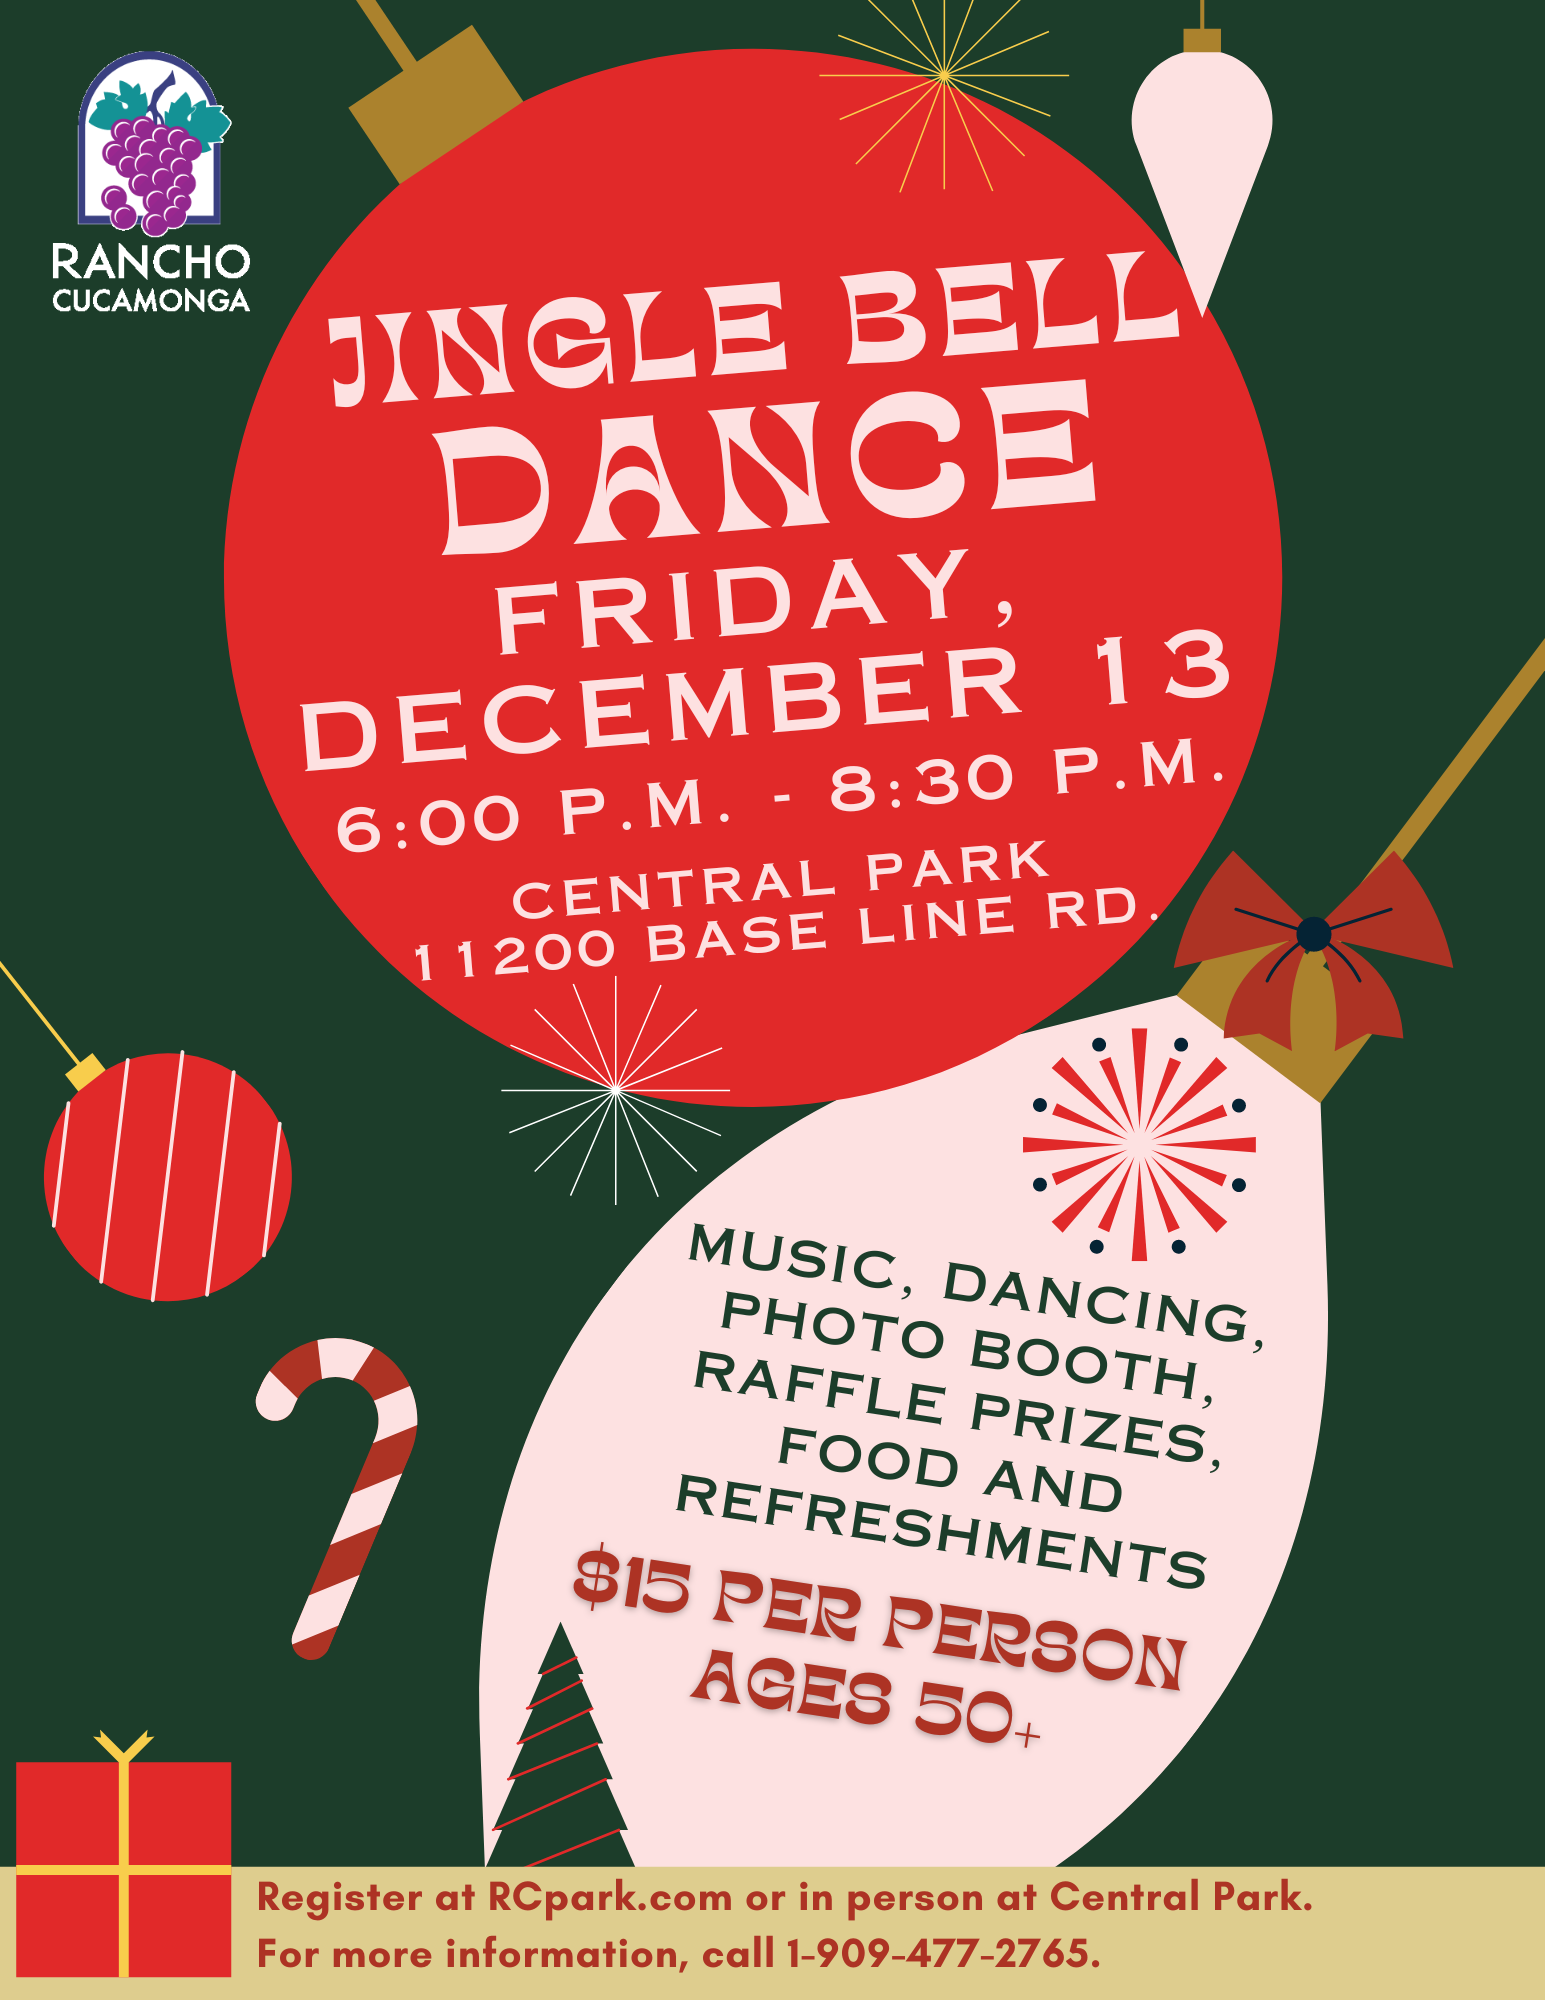 Jingle Bell Dance